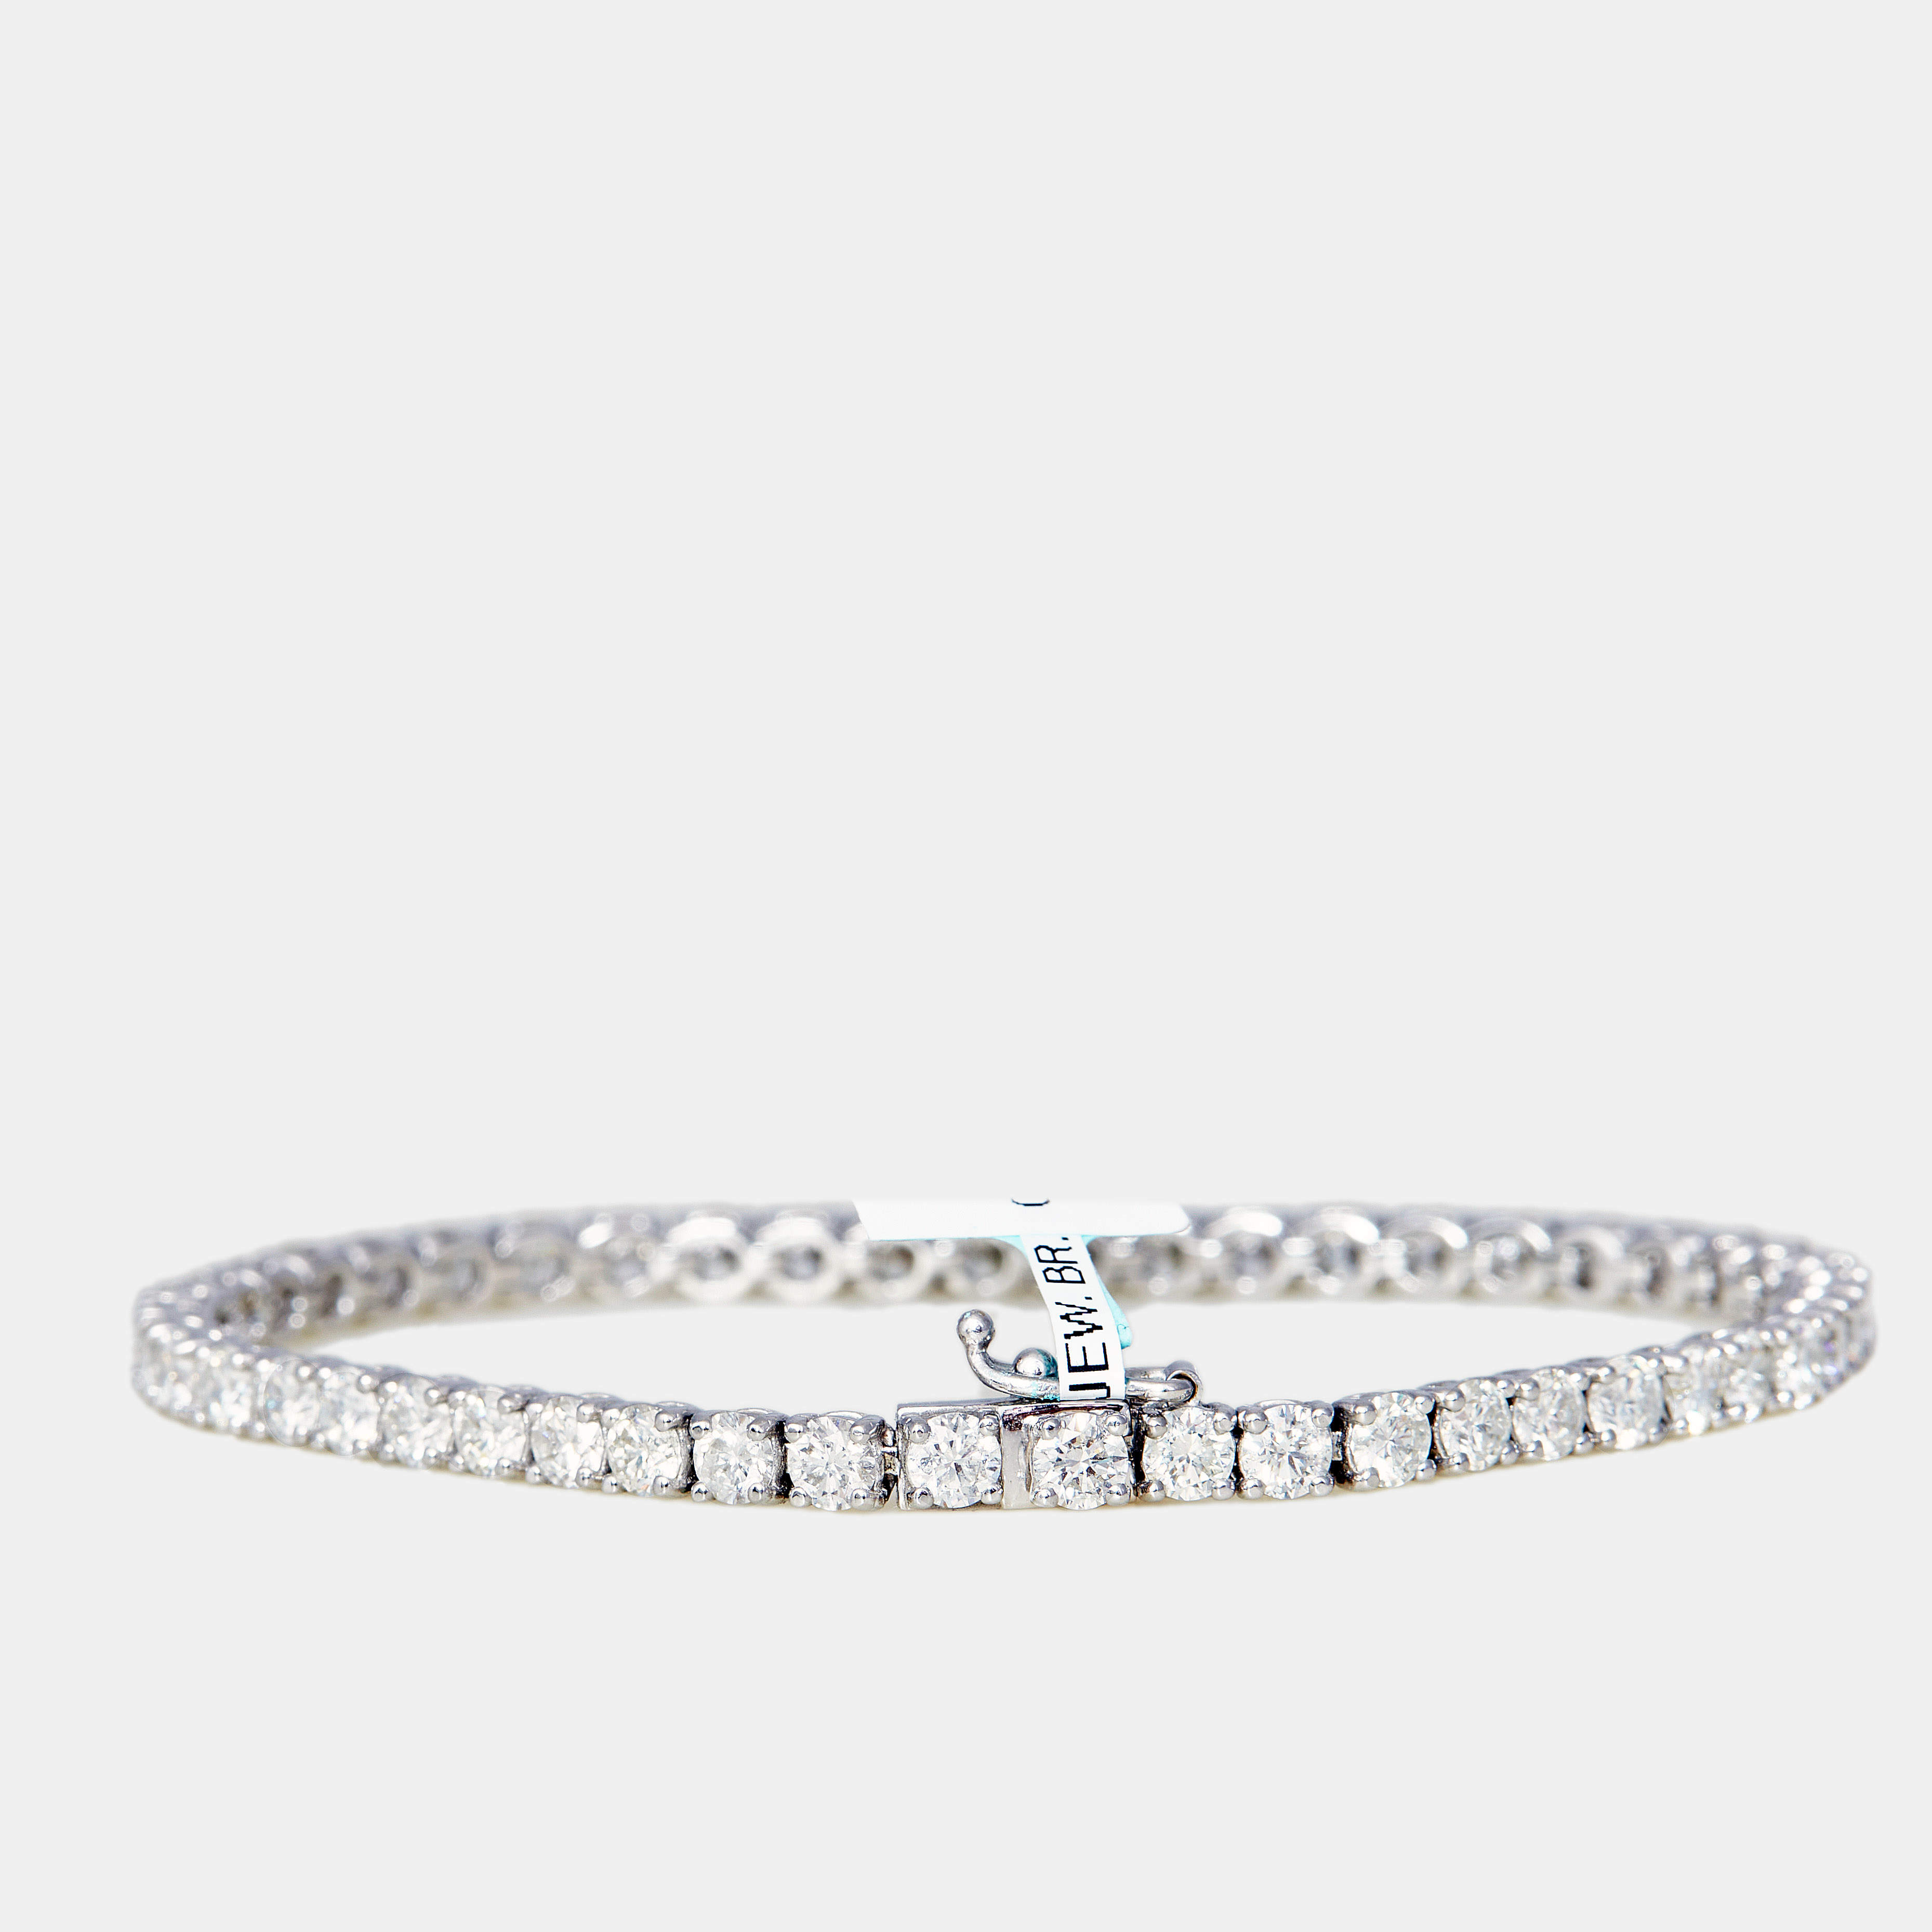 6 Carat Diamond Tennis Bracelet | 6 Carat Diamond Bracelet – deBebians